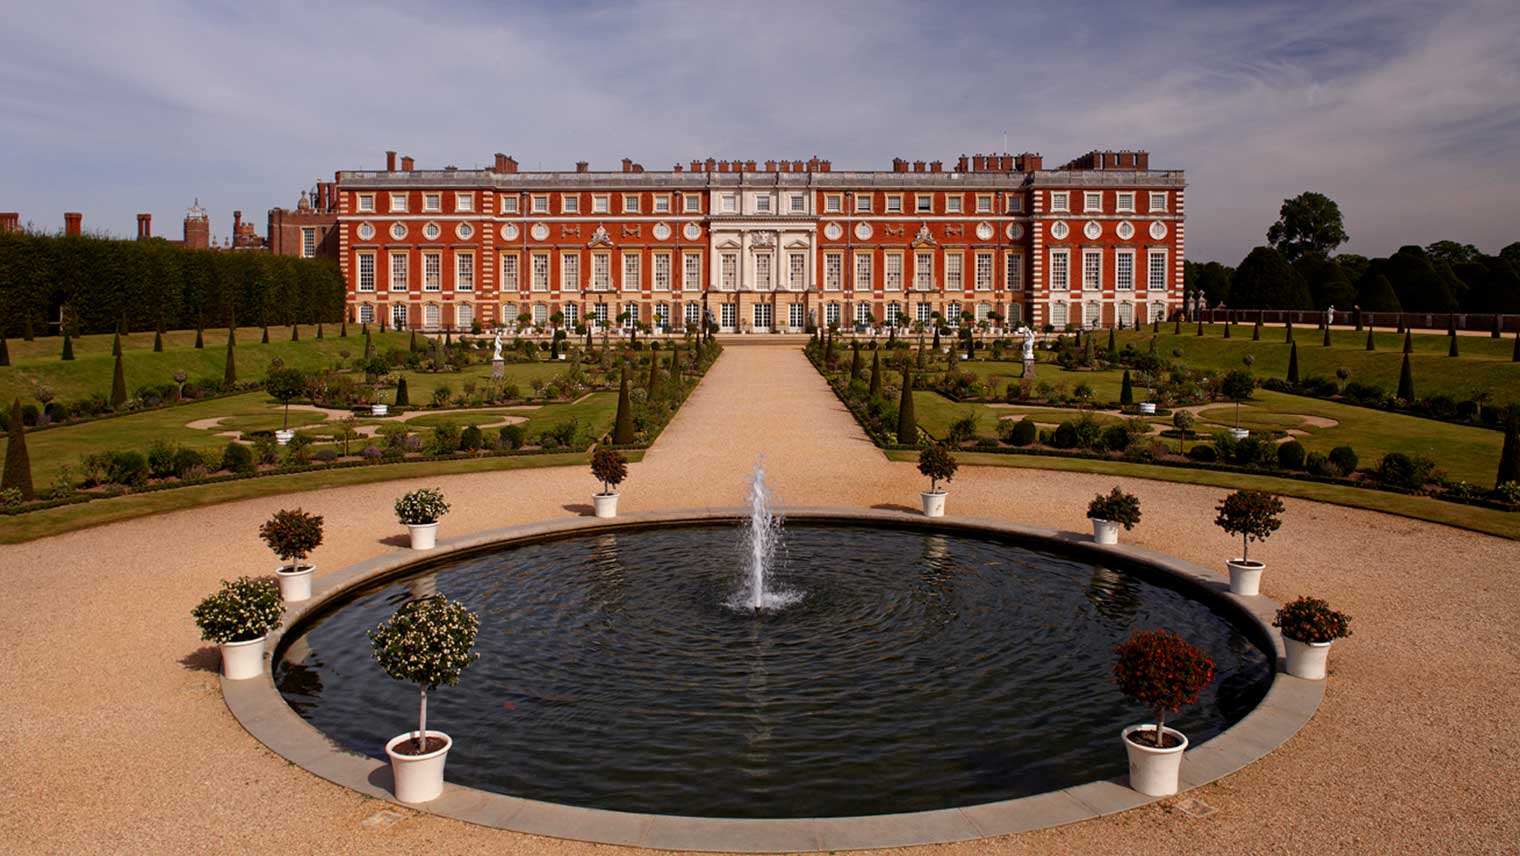 Hampton Court Palace gardens and Baroque building